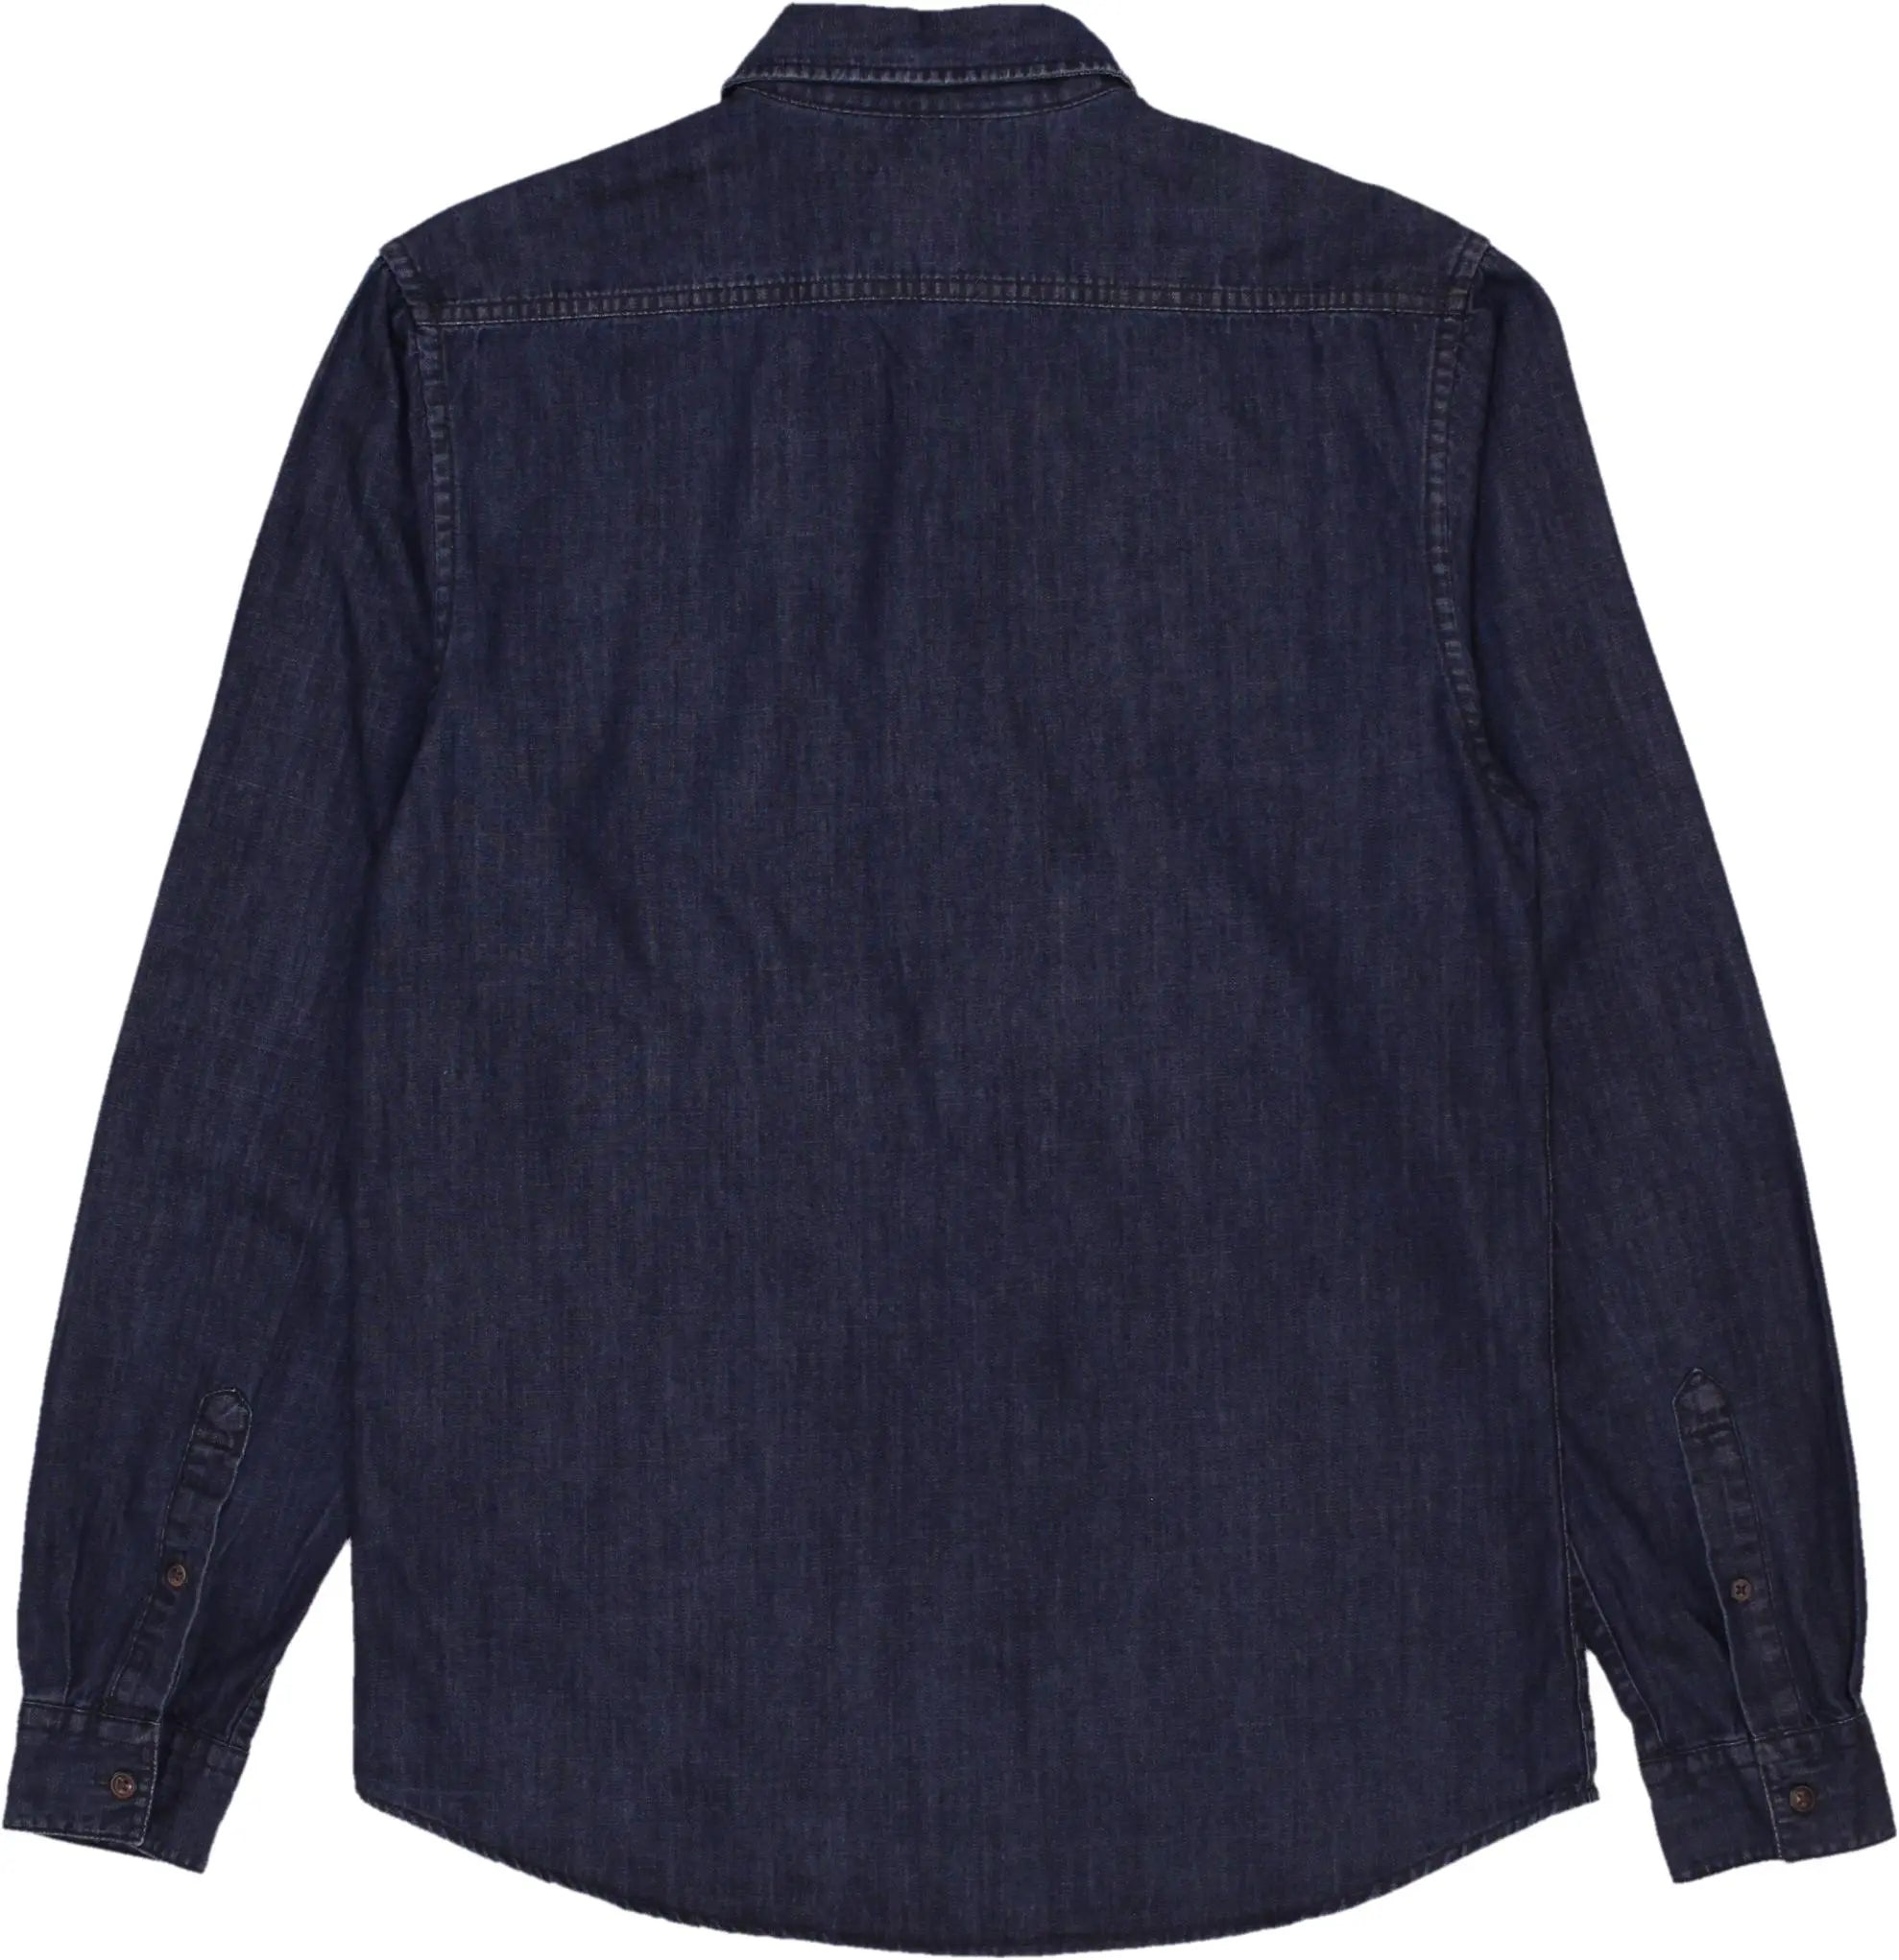 Cedar Wood State - Blue Denim Shirt- ThriftTale.com - Vintage and second handclothing